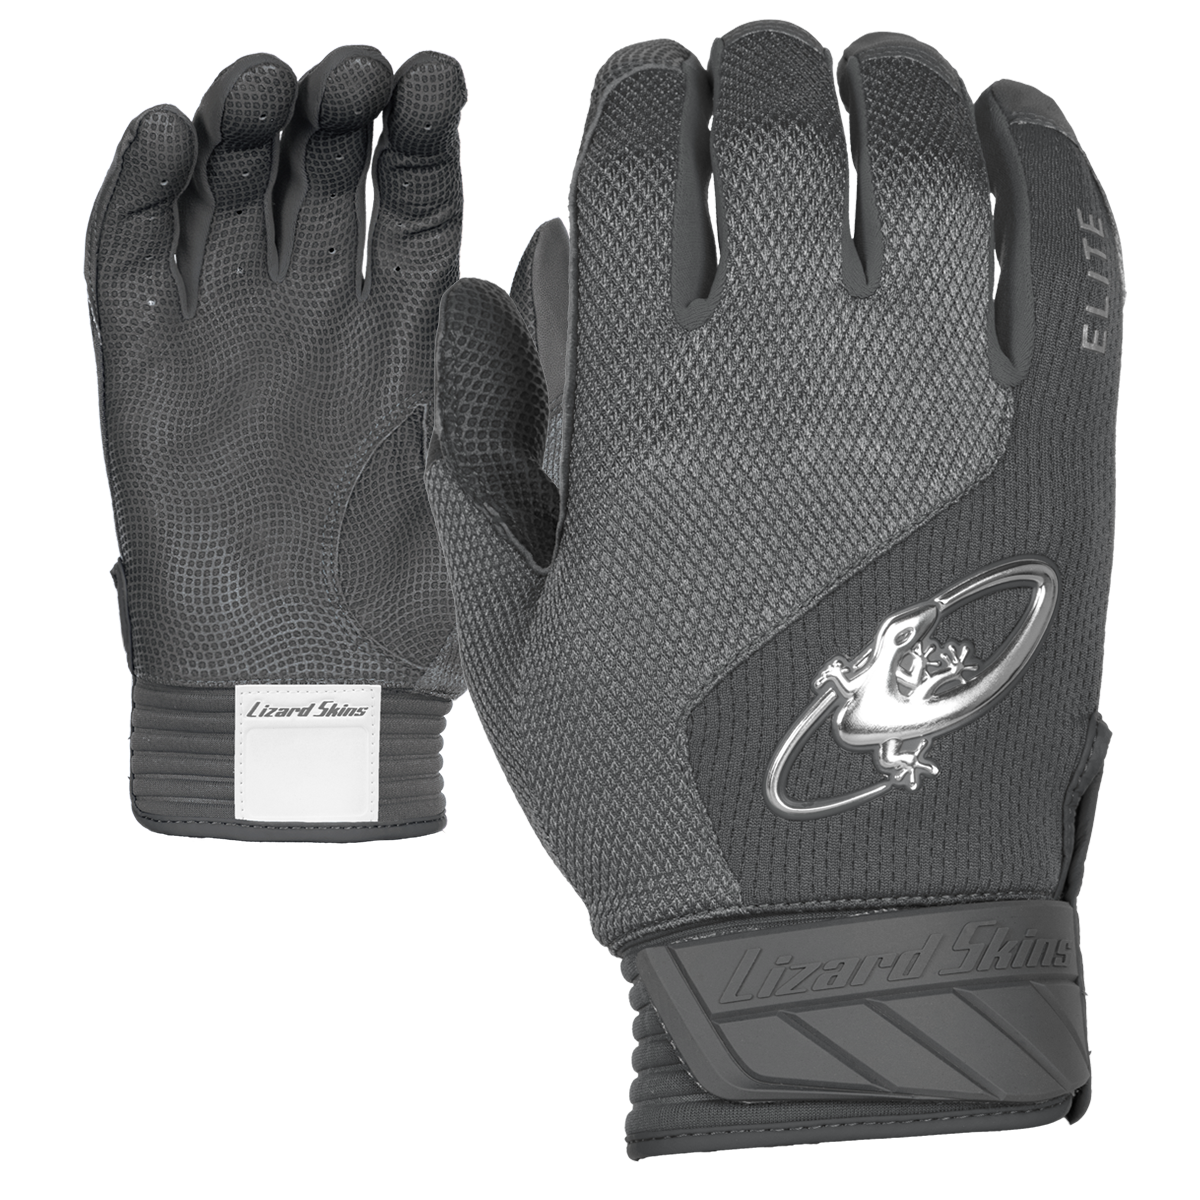 Lizard Skins Komodo Elite V2 Batting Glove